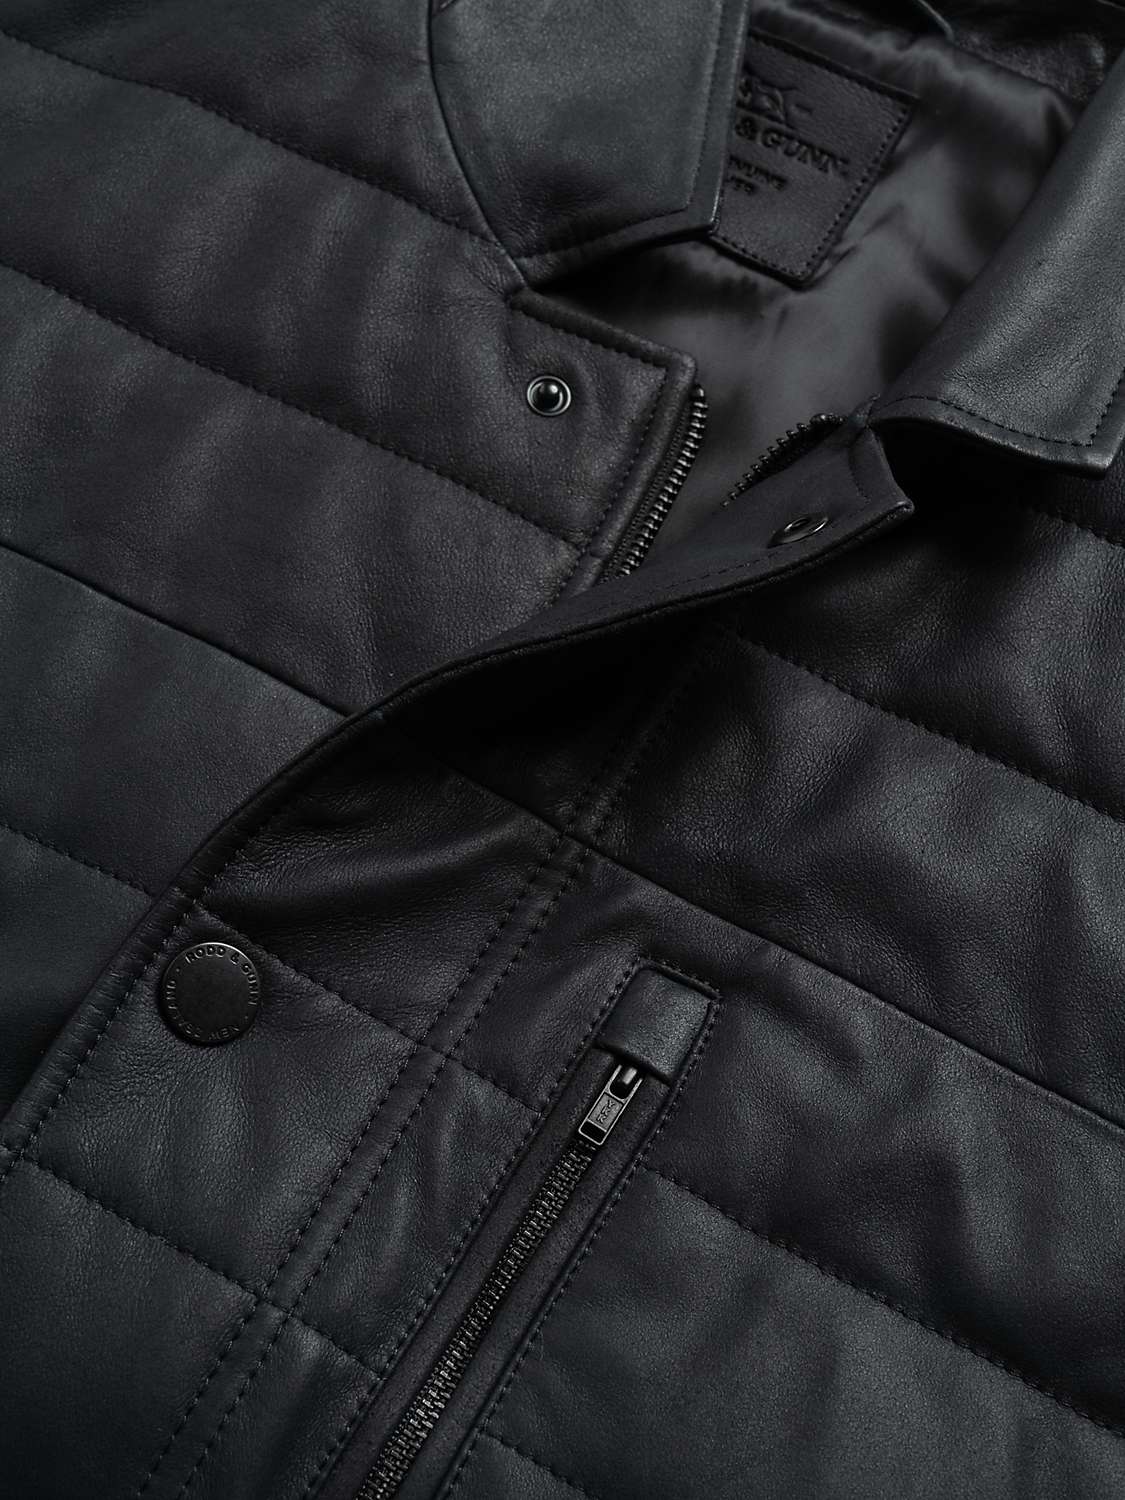 Buy Rodd & Gunn Ashwell Leather Jacket, Onyx Online at johnlewis.com